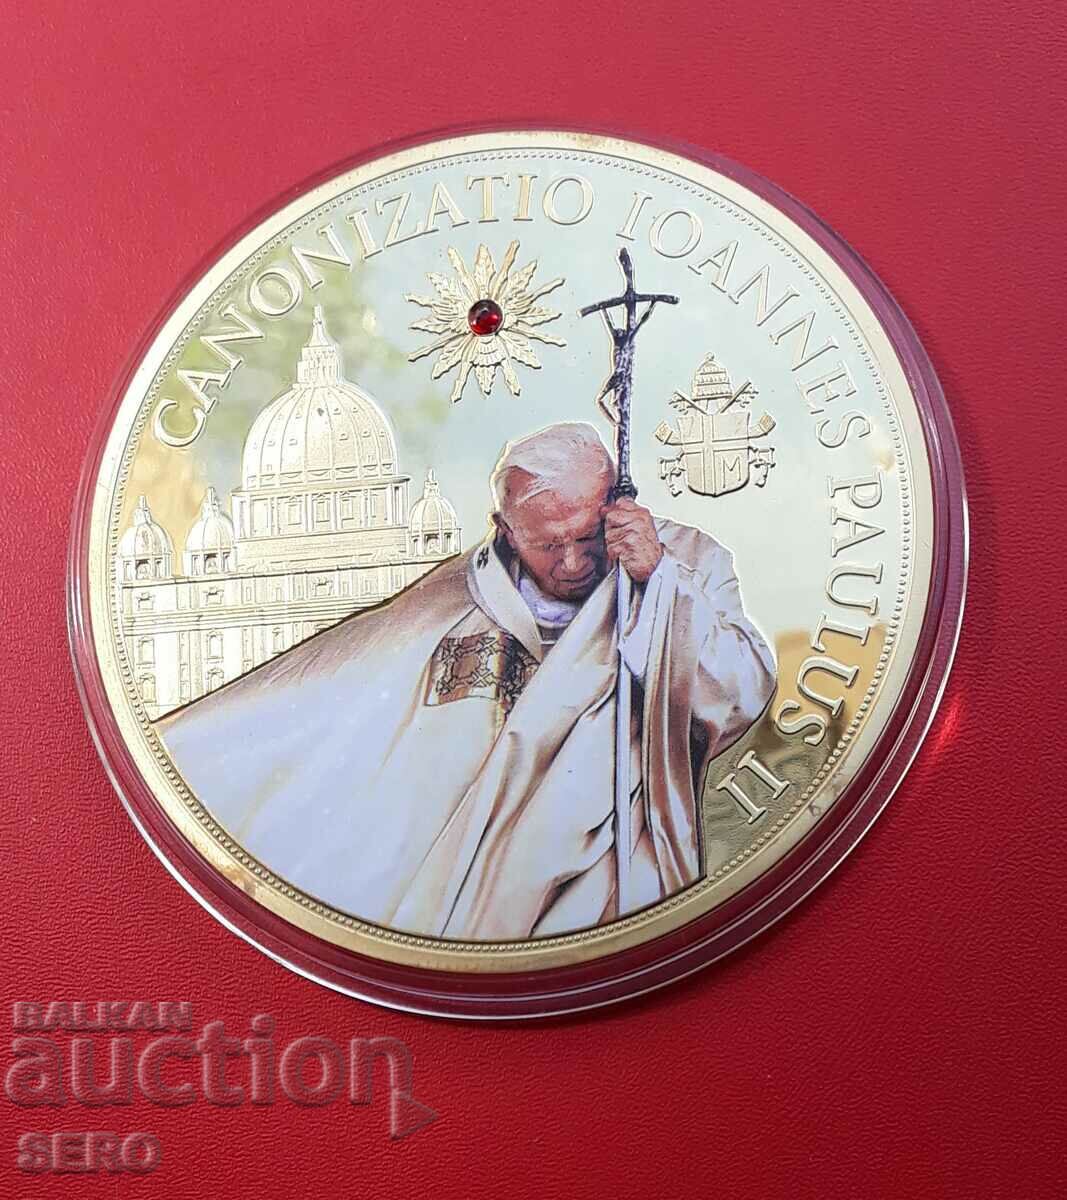 Vatican - medalie mare si frumoasa 2014 - placata cu aur cu 1 cristal